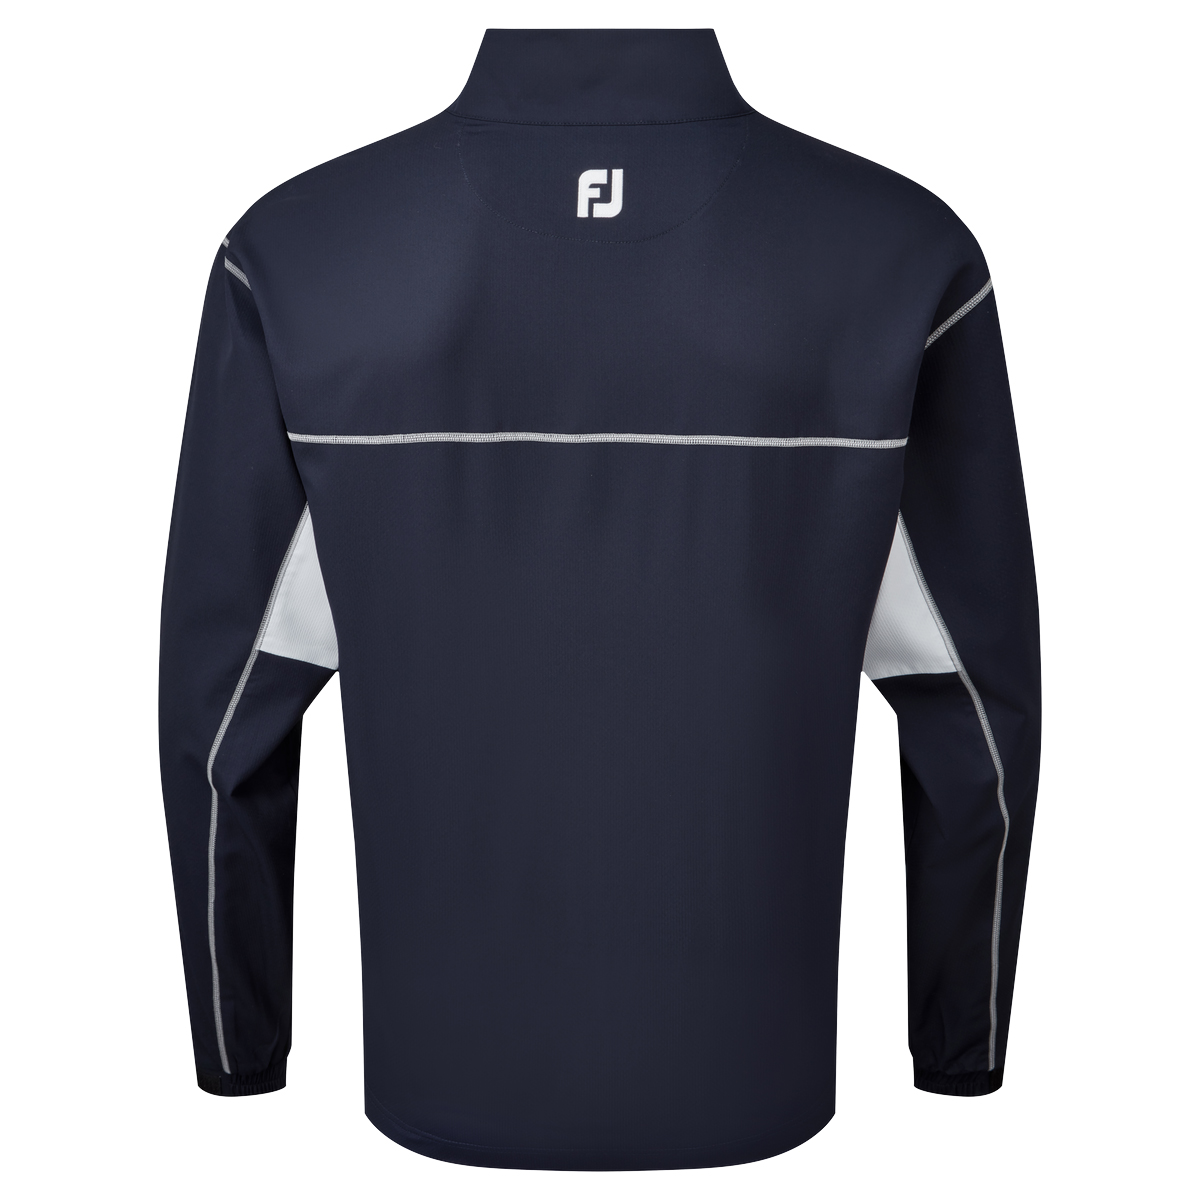 FootJoy EU FJ Full Zip Wind Shirt Jacket  - Navy/White